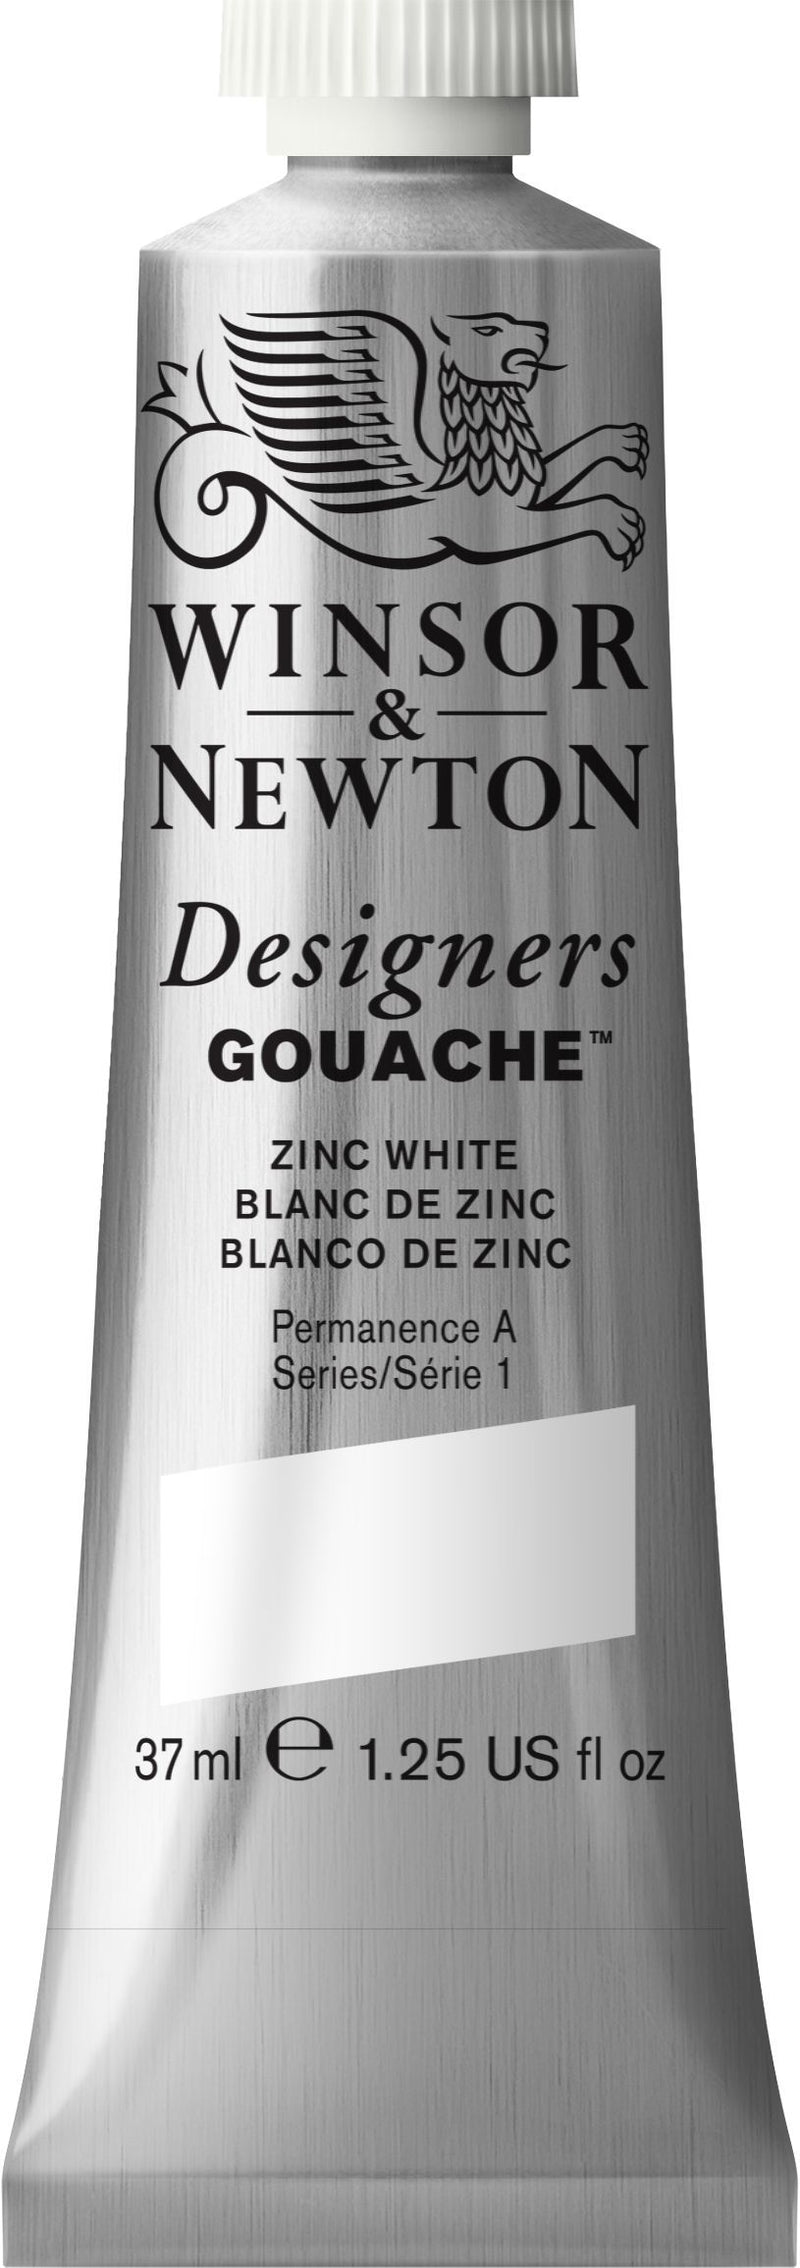 Winsor & Newton Designers' Gouache Paint 37ml